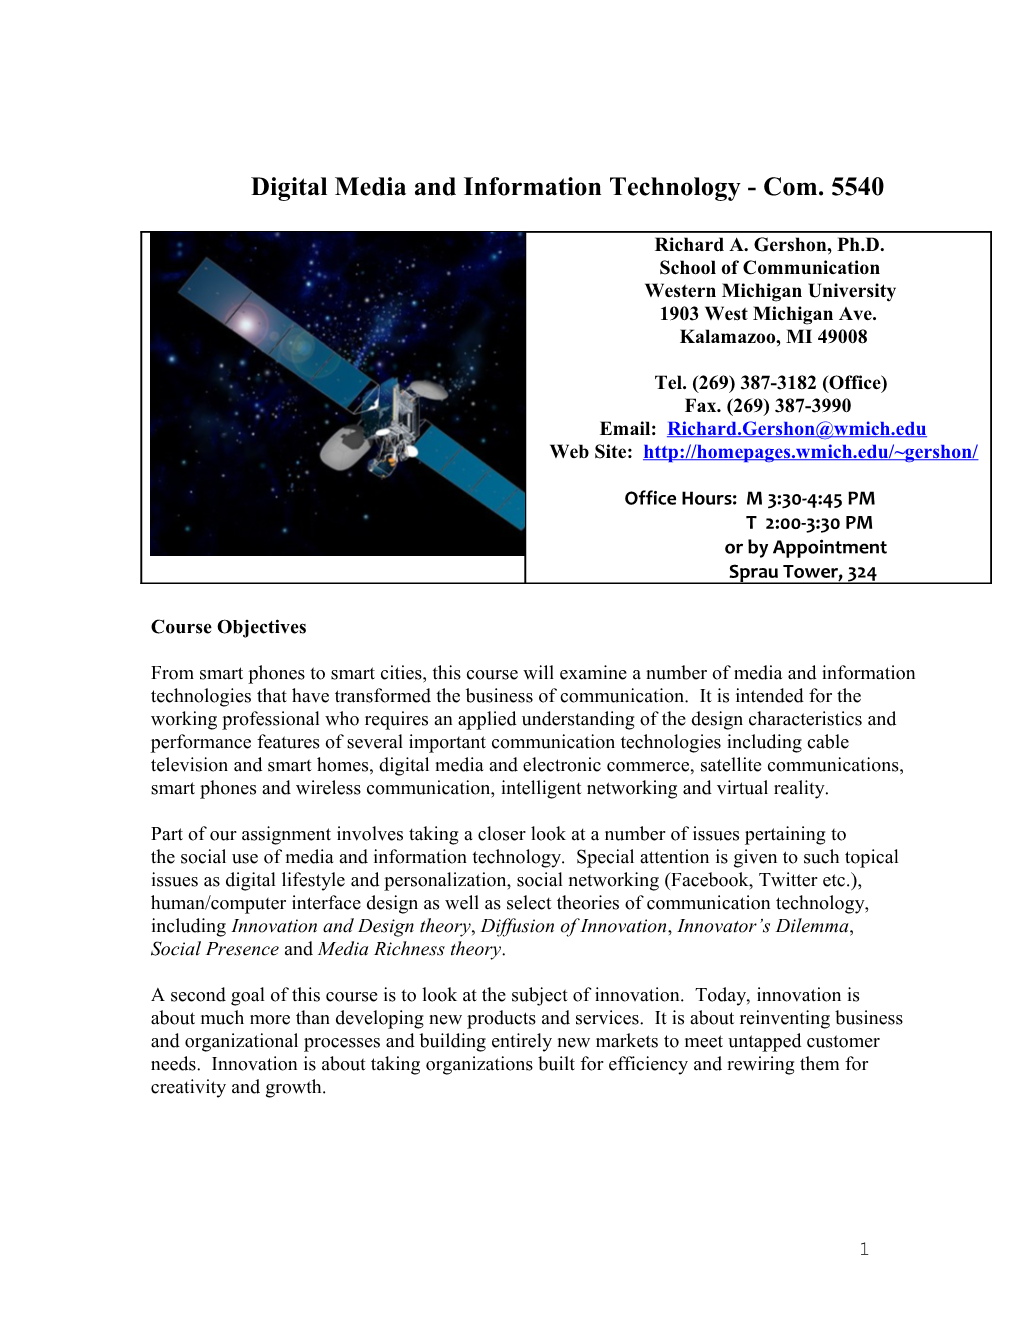 Digital Media and Information Technology - Com. 5540